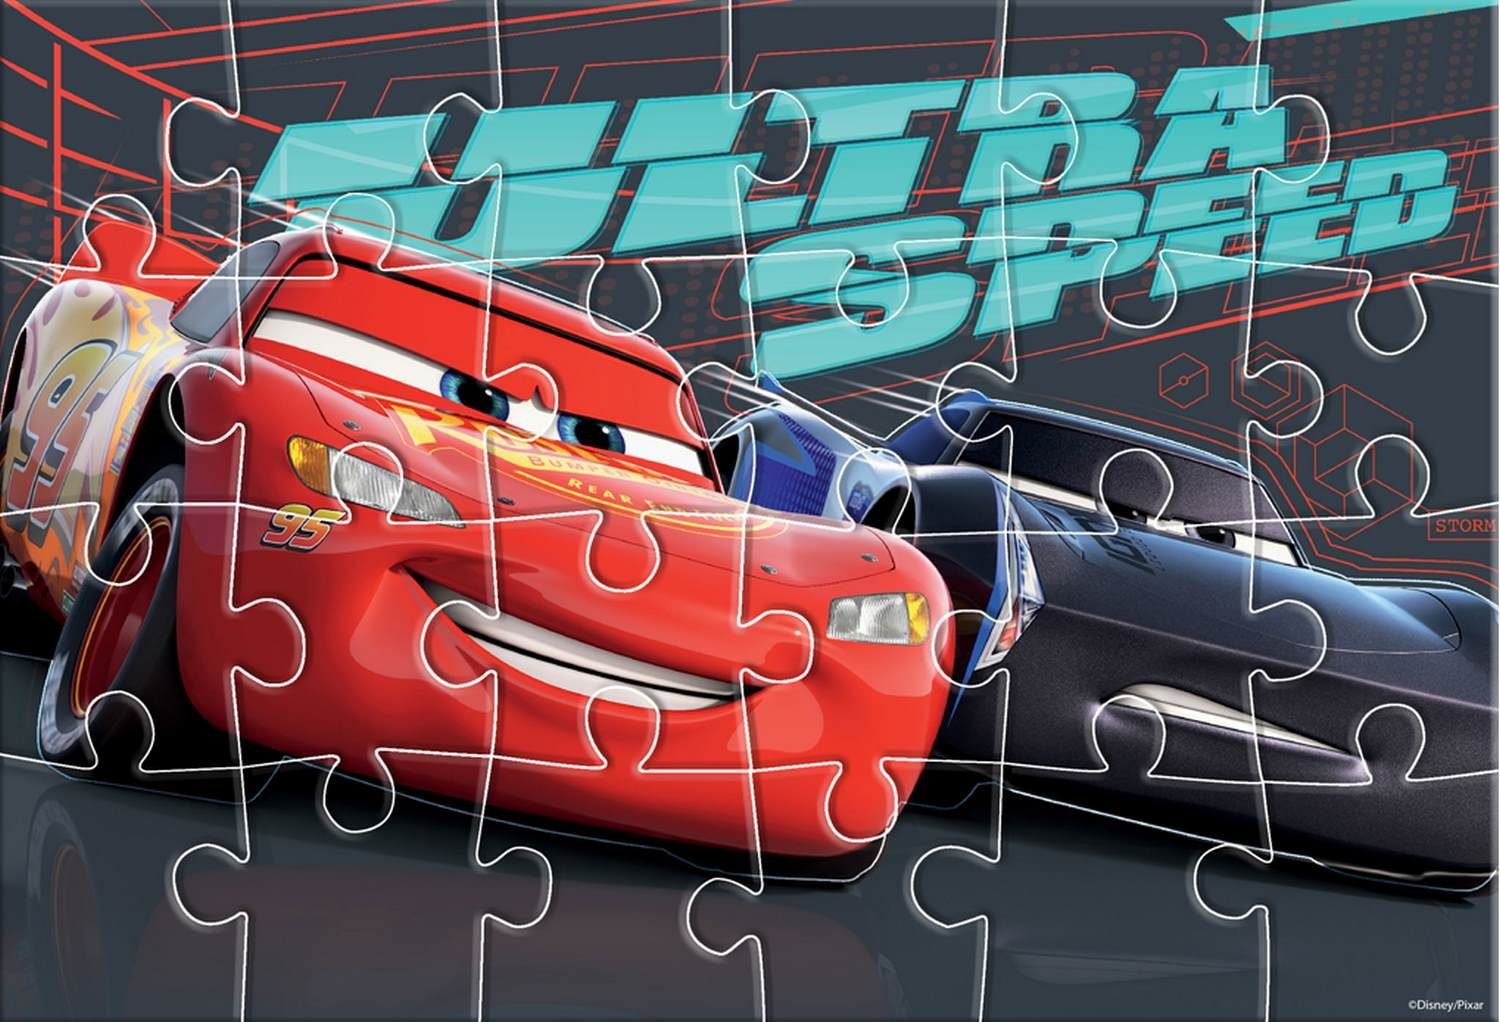 24-tlg. Cars Diakakis Puzzleteile Ausmalbilder Steckpuzzle Malpuzzle mit 41x28, 2in1